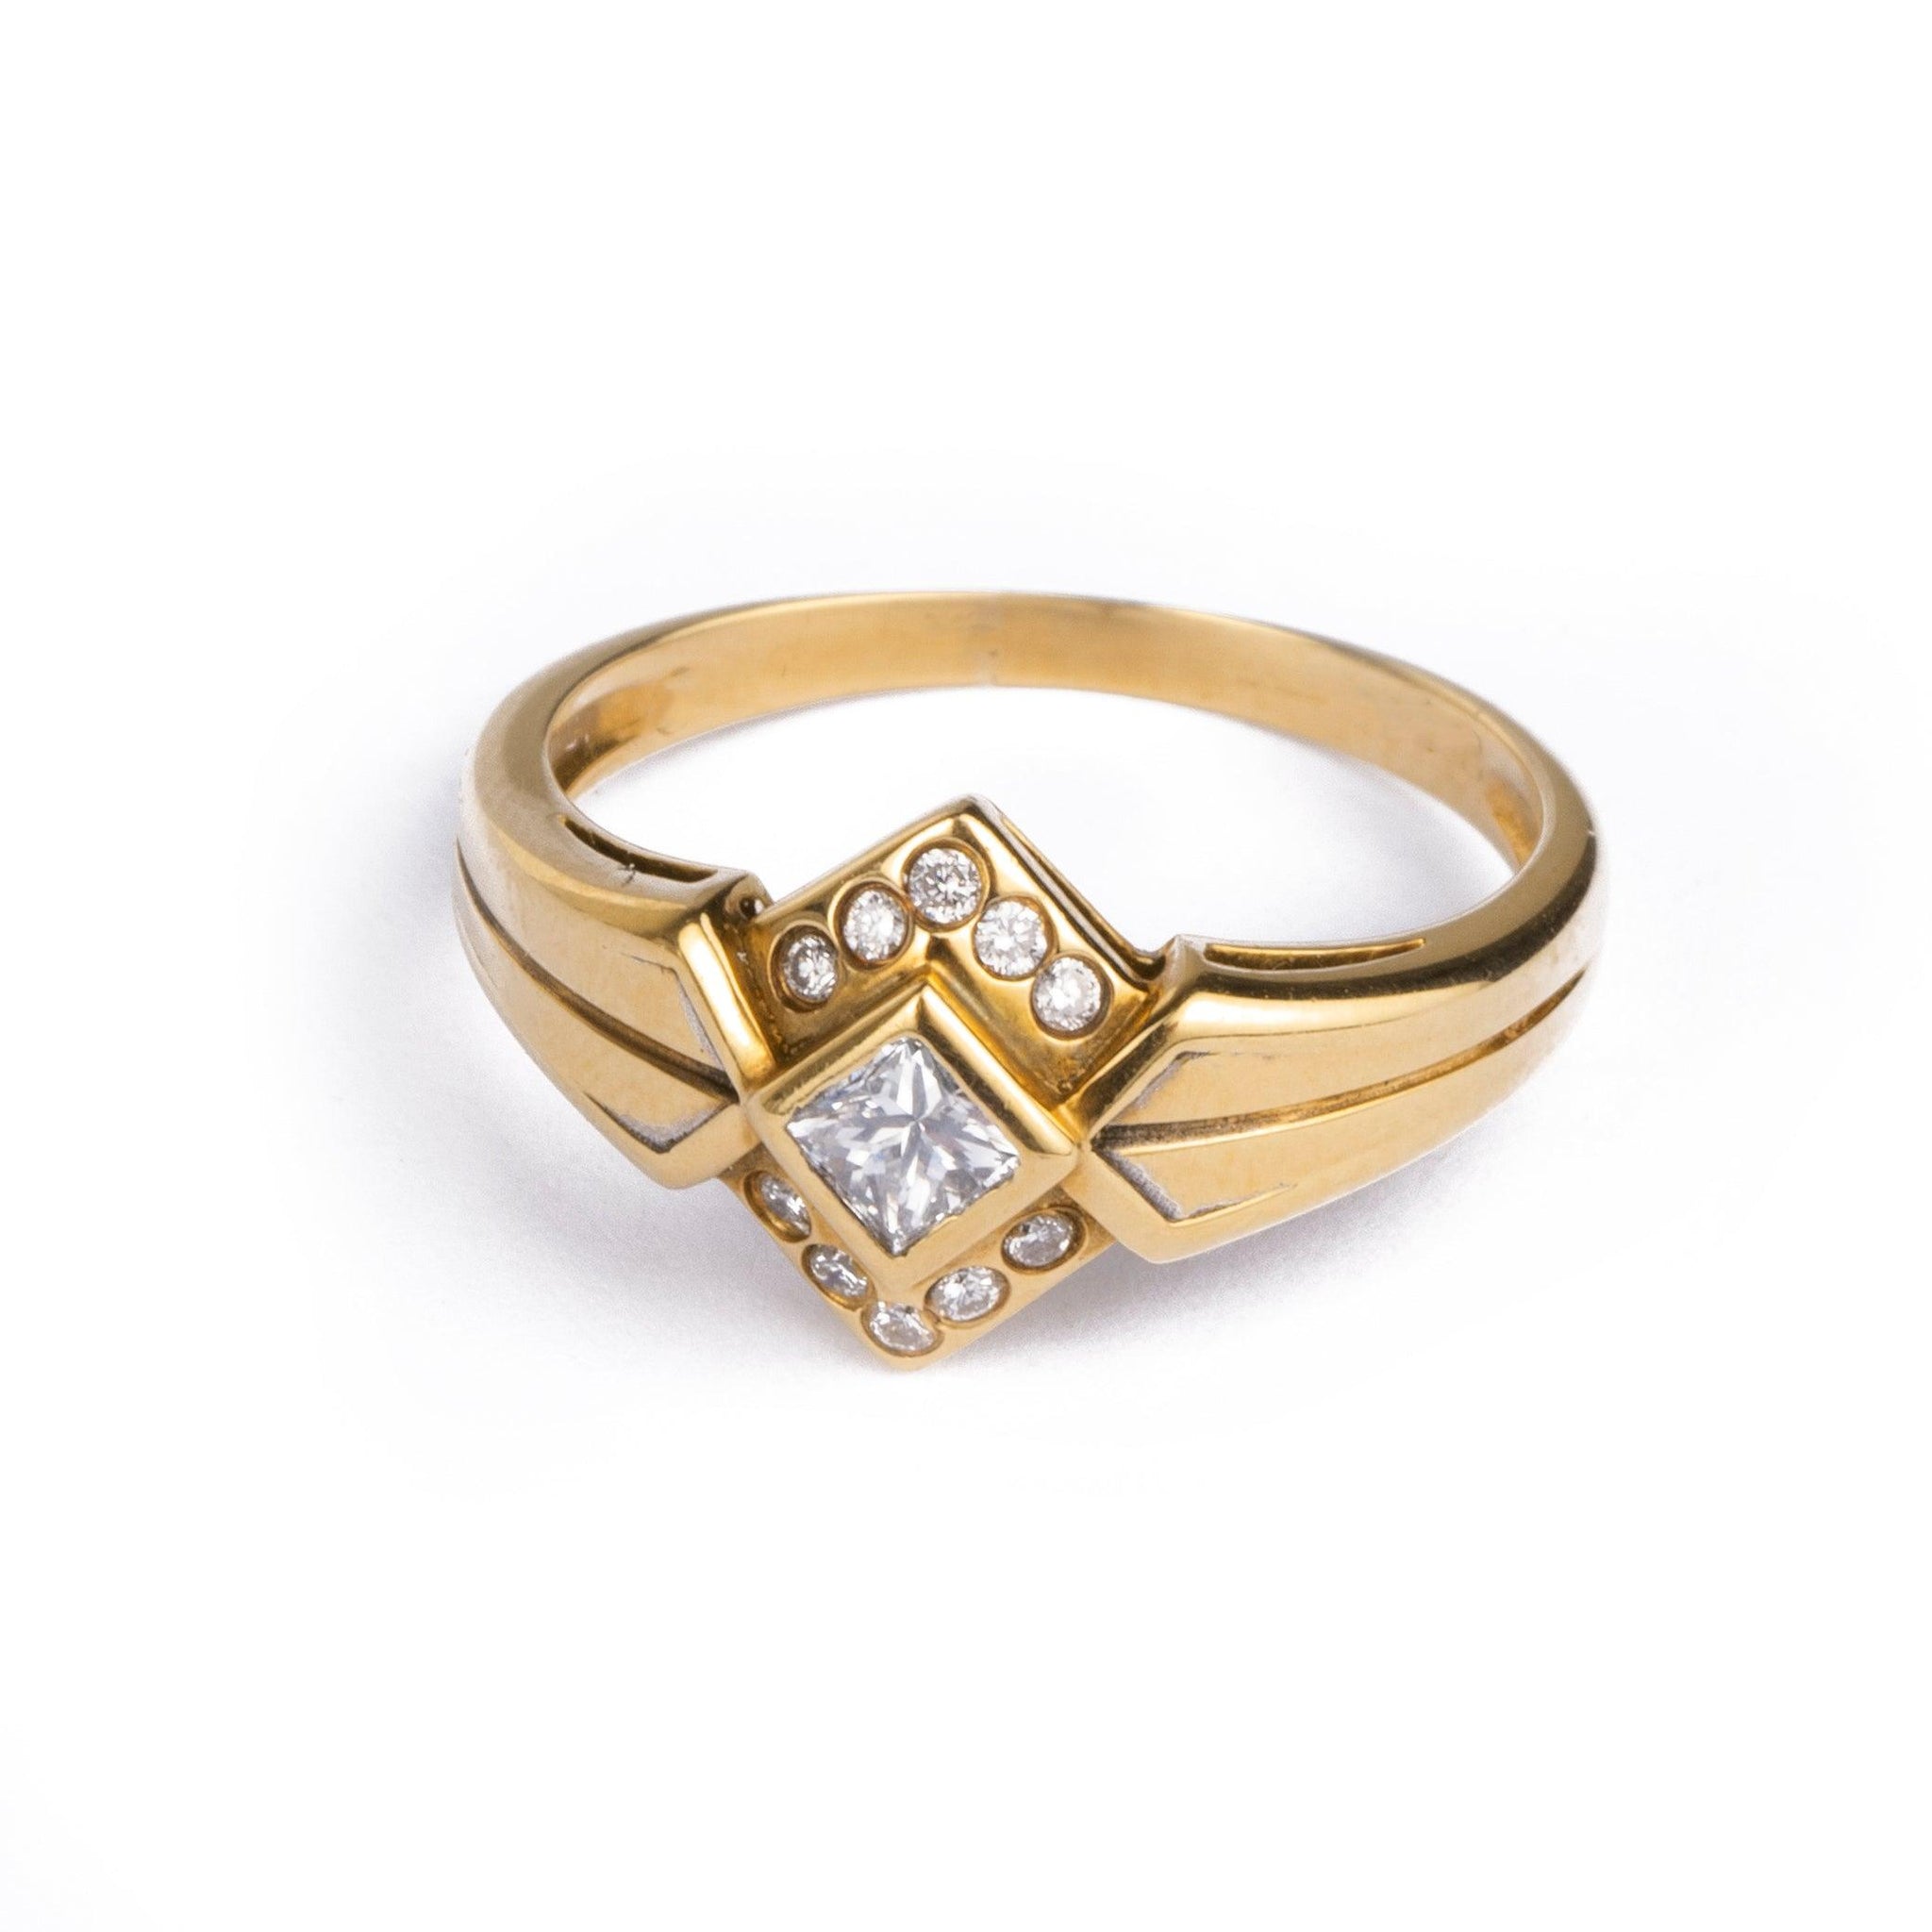 18ct Yellow Gold Diamond Ring Q1188